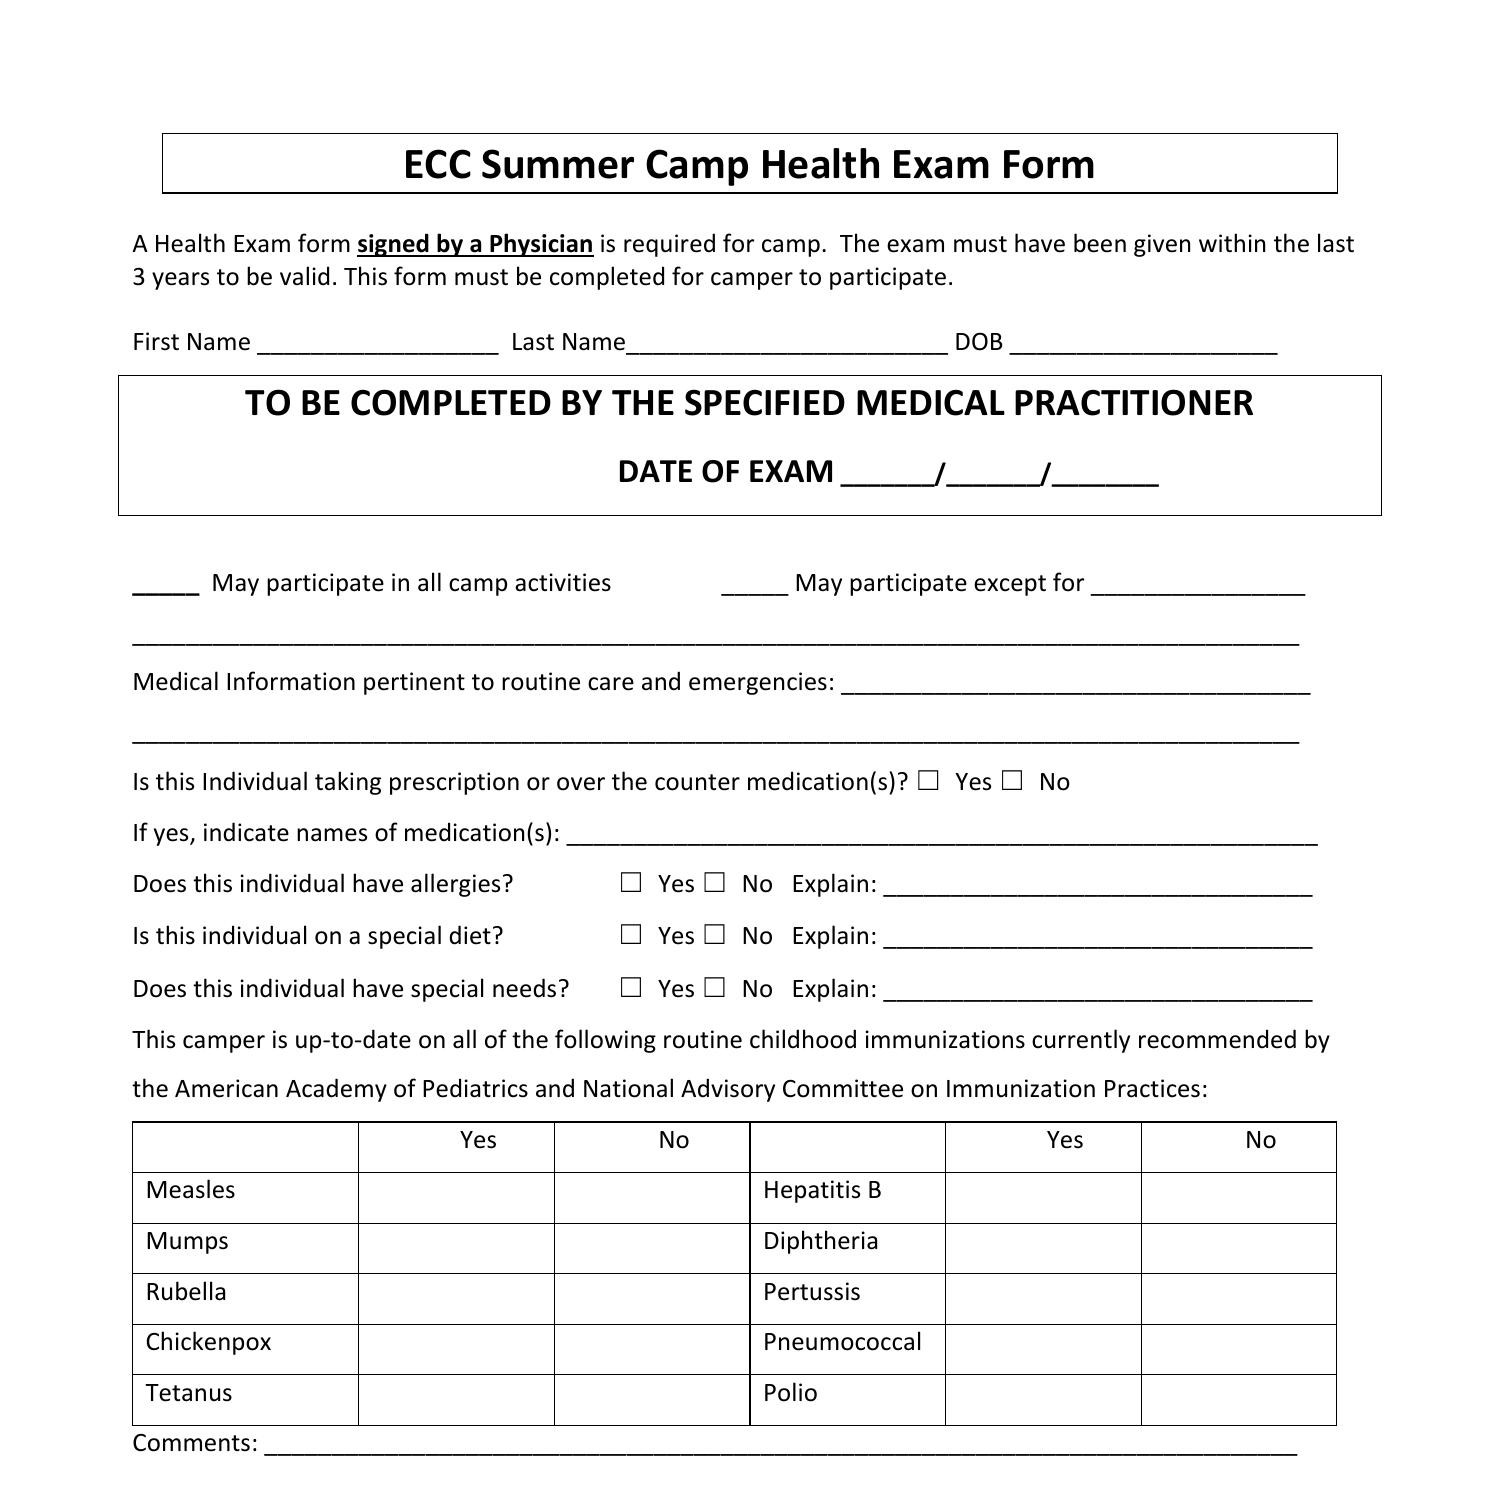 ECC Summer Camp Health Exam Form.pdf | DocDroid